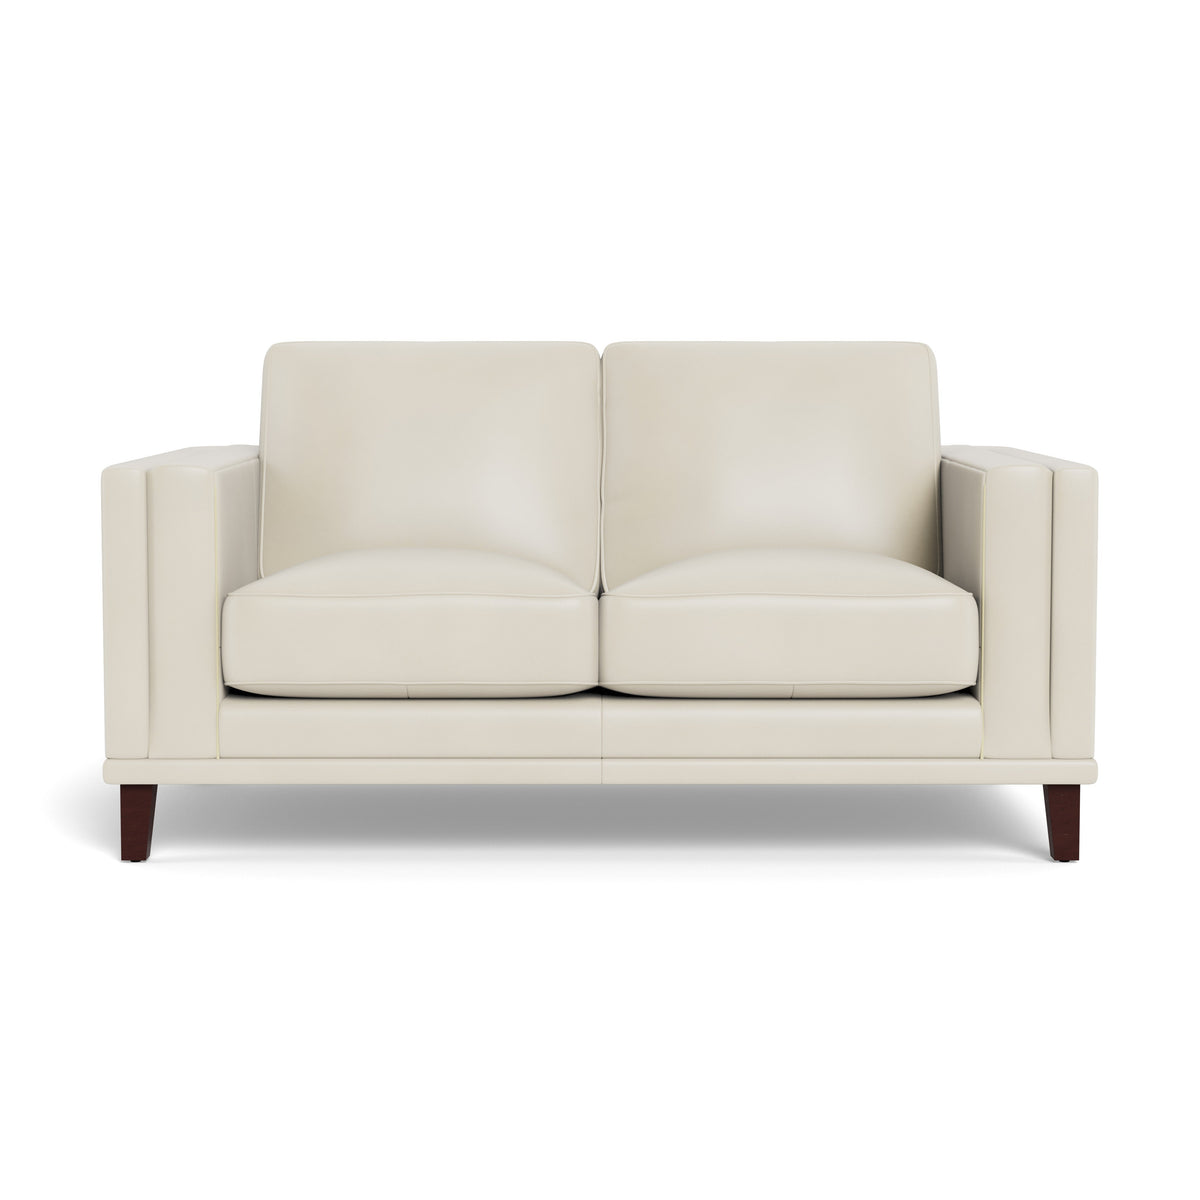 Lyon Leather Sofa Collection - MJM Furniture